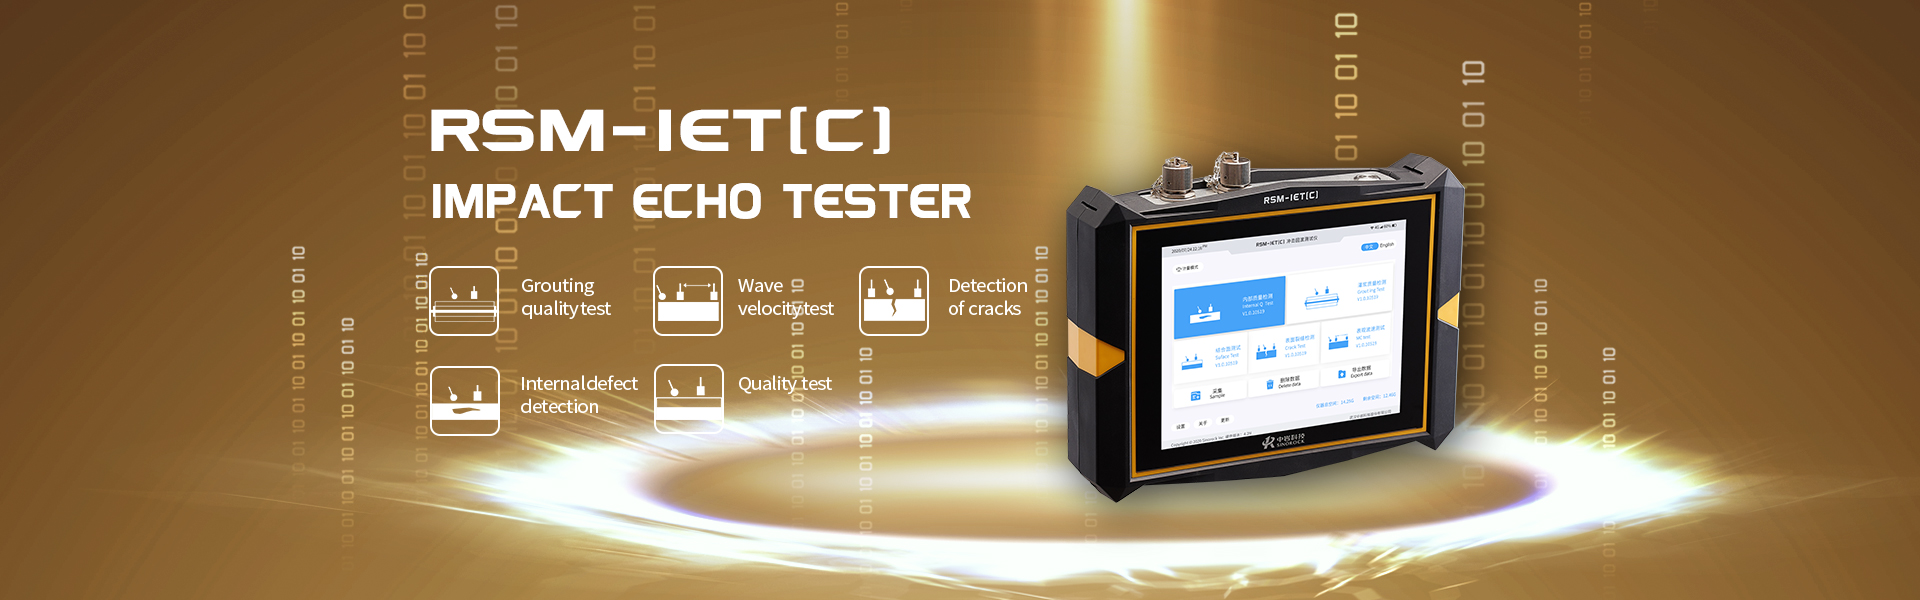 RSM-IET(C) Impact Echo Tester